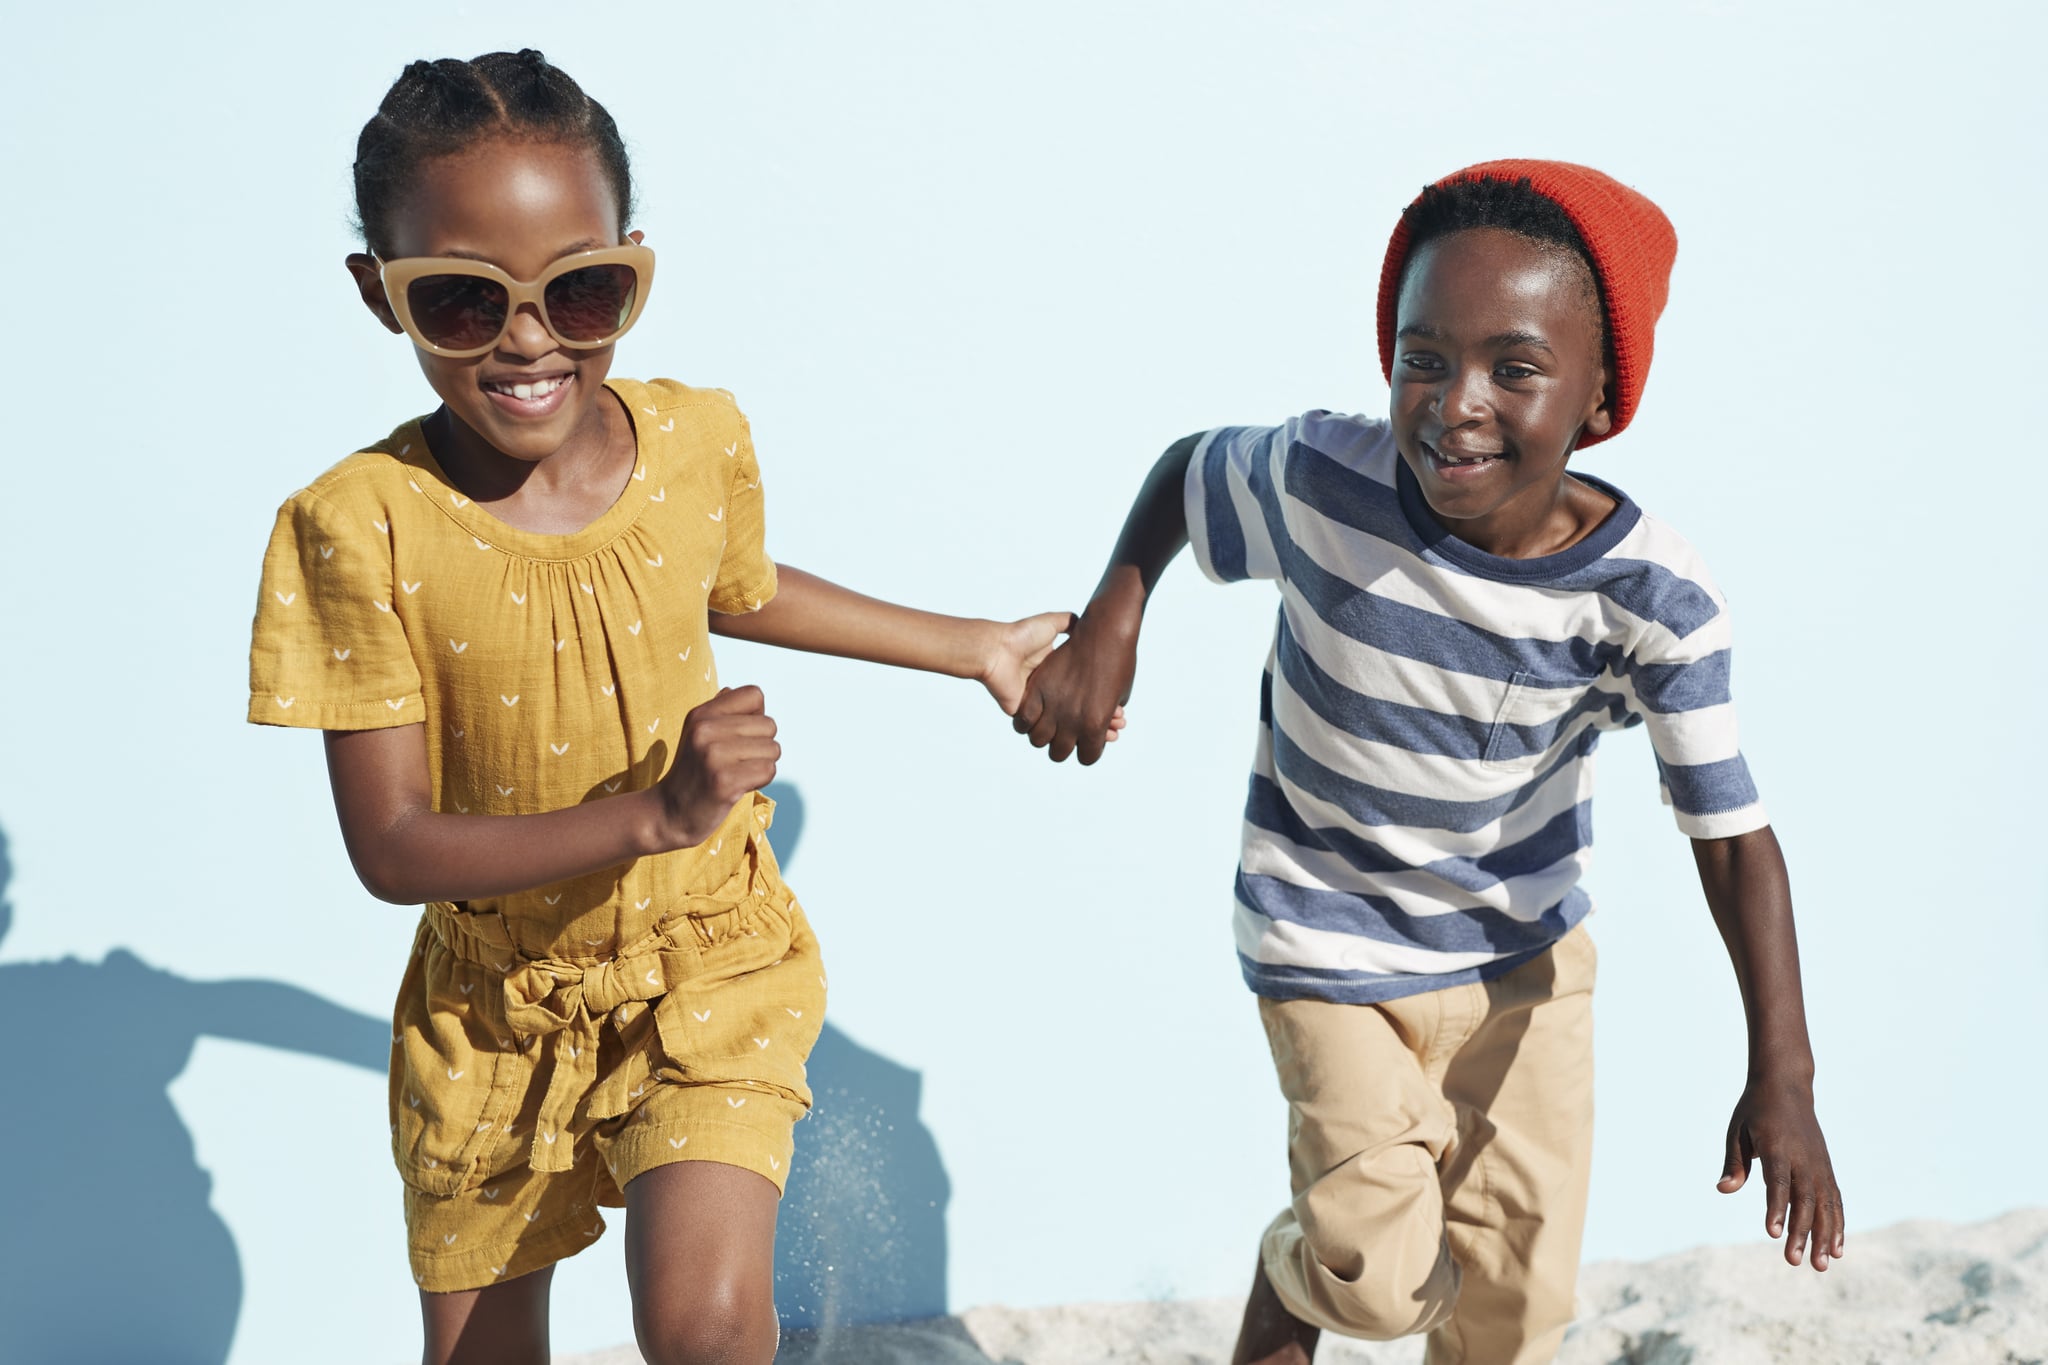 Children having joyful interaction, shot on a blue solid background on the beach in full sun